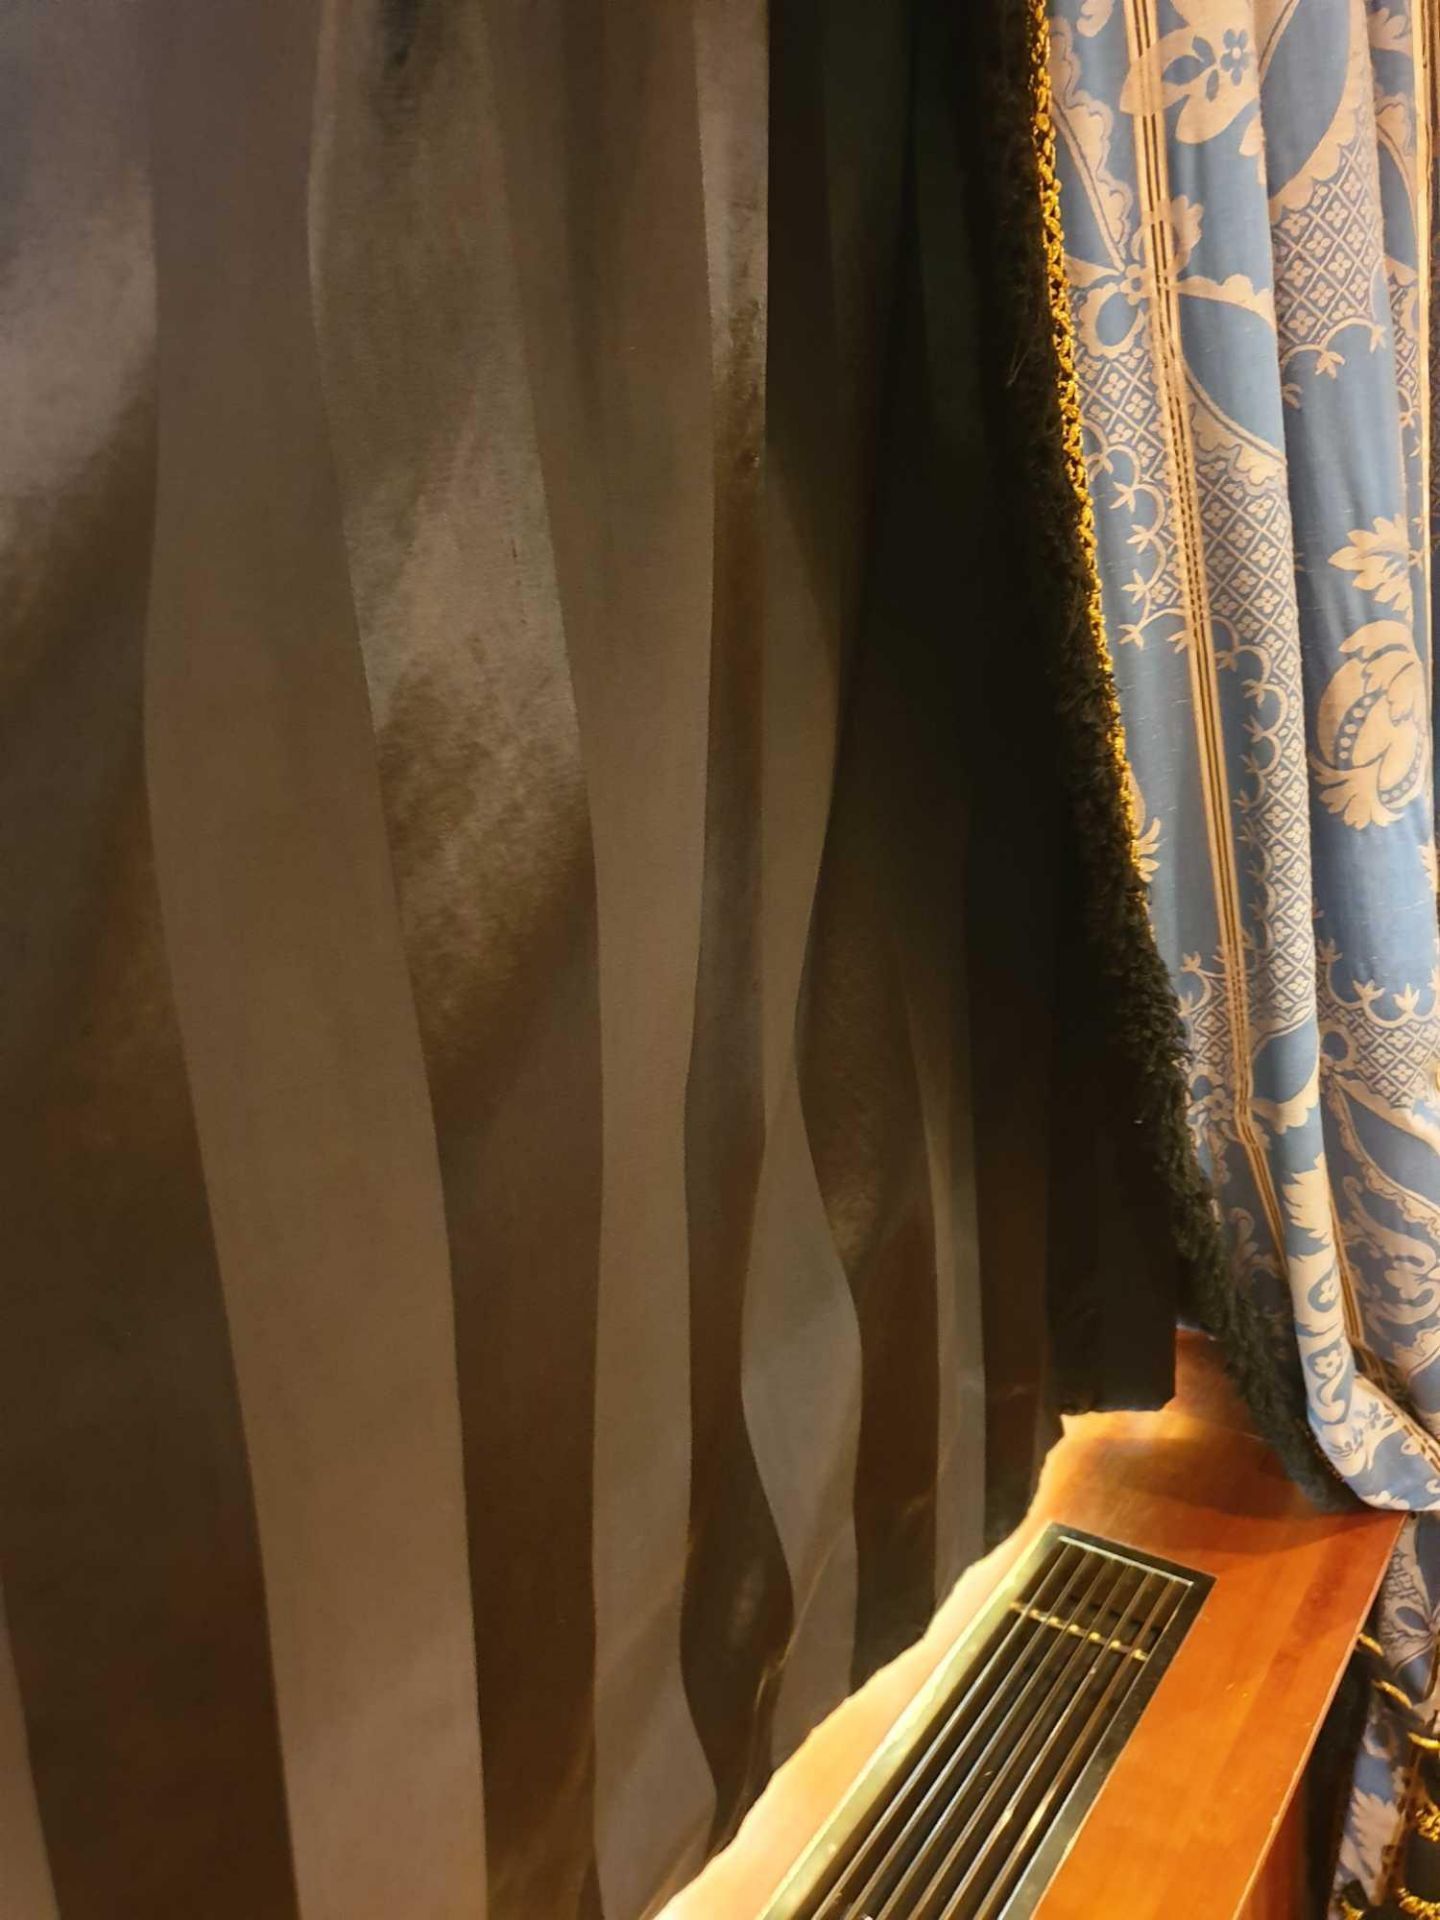 A Pair Of Silk Drapes Blue Gold And Brown With Tassel Trim 190 x 250cm (Suri Bedroom off study) - Bild 3 aus 4